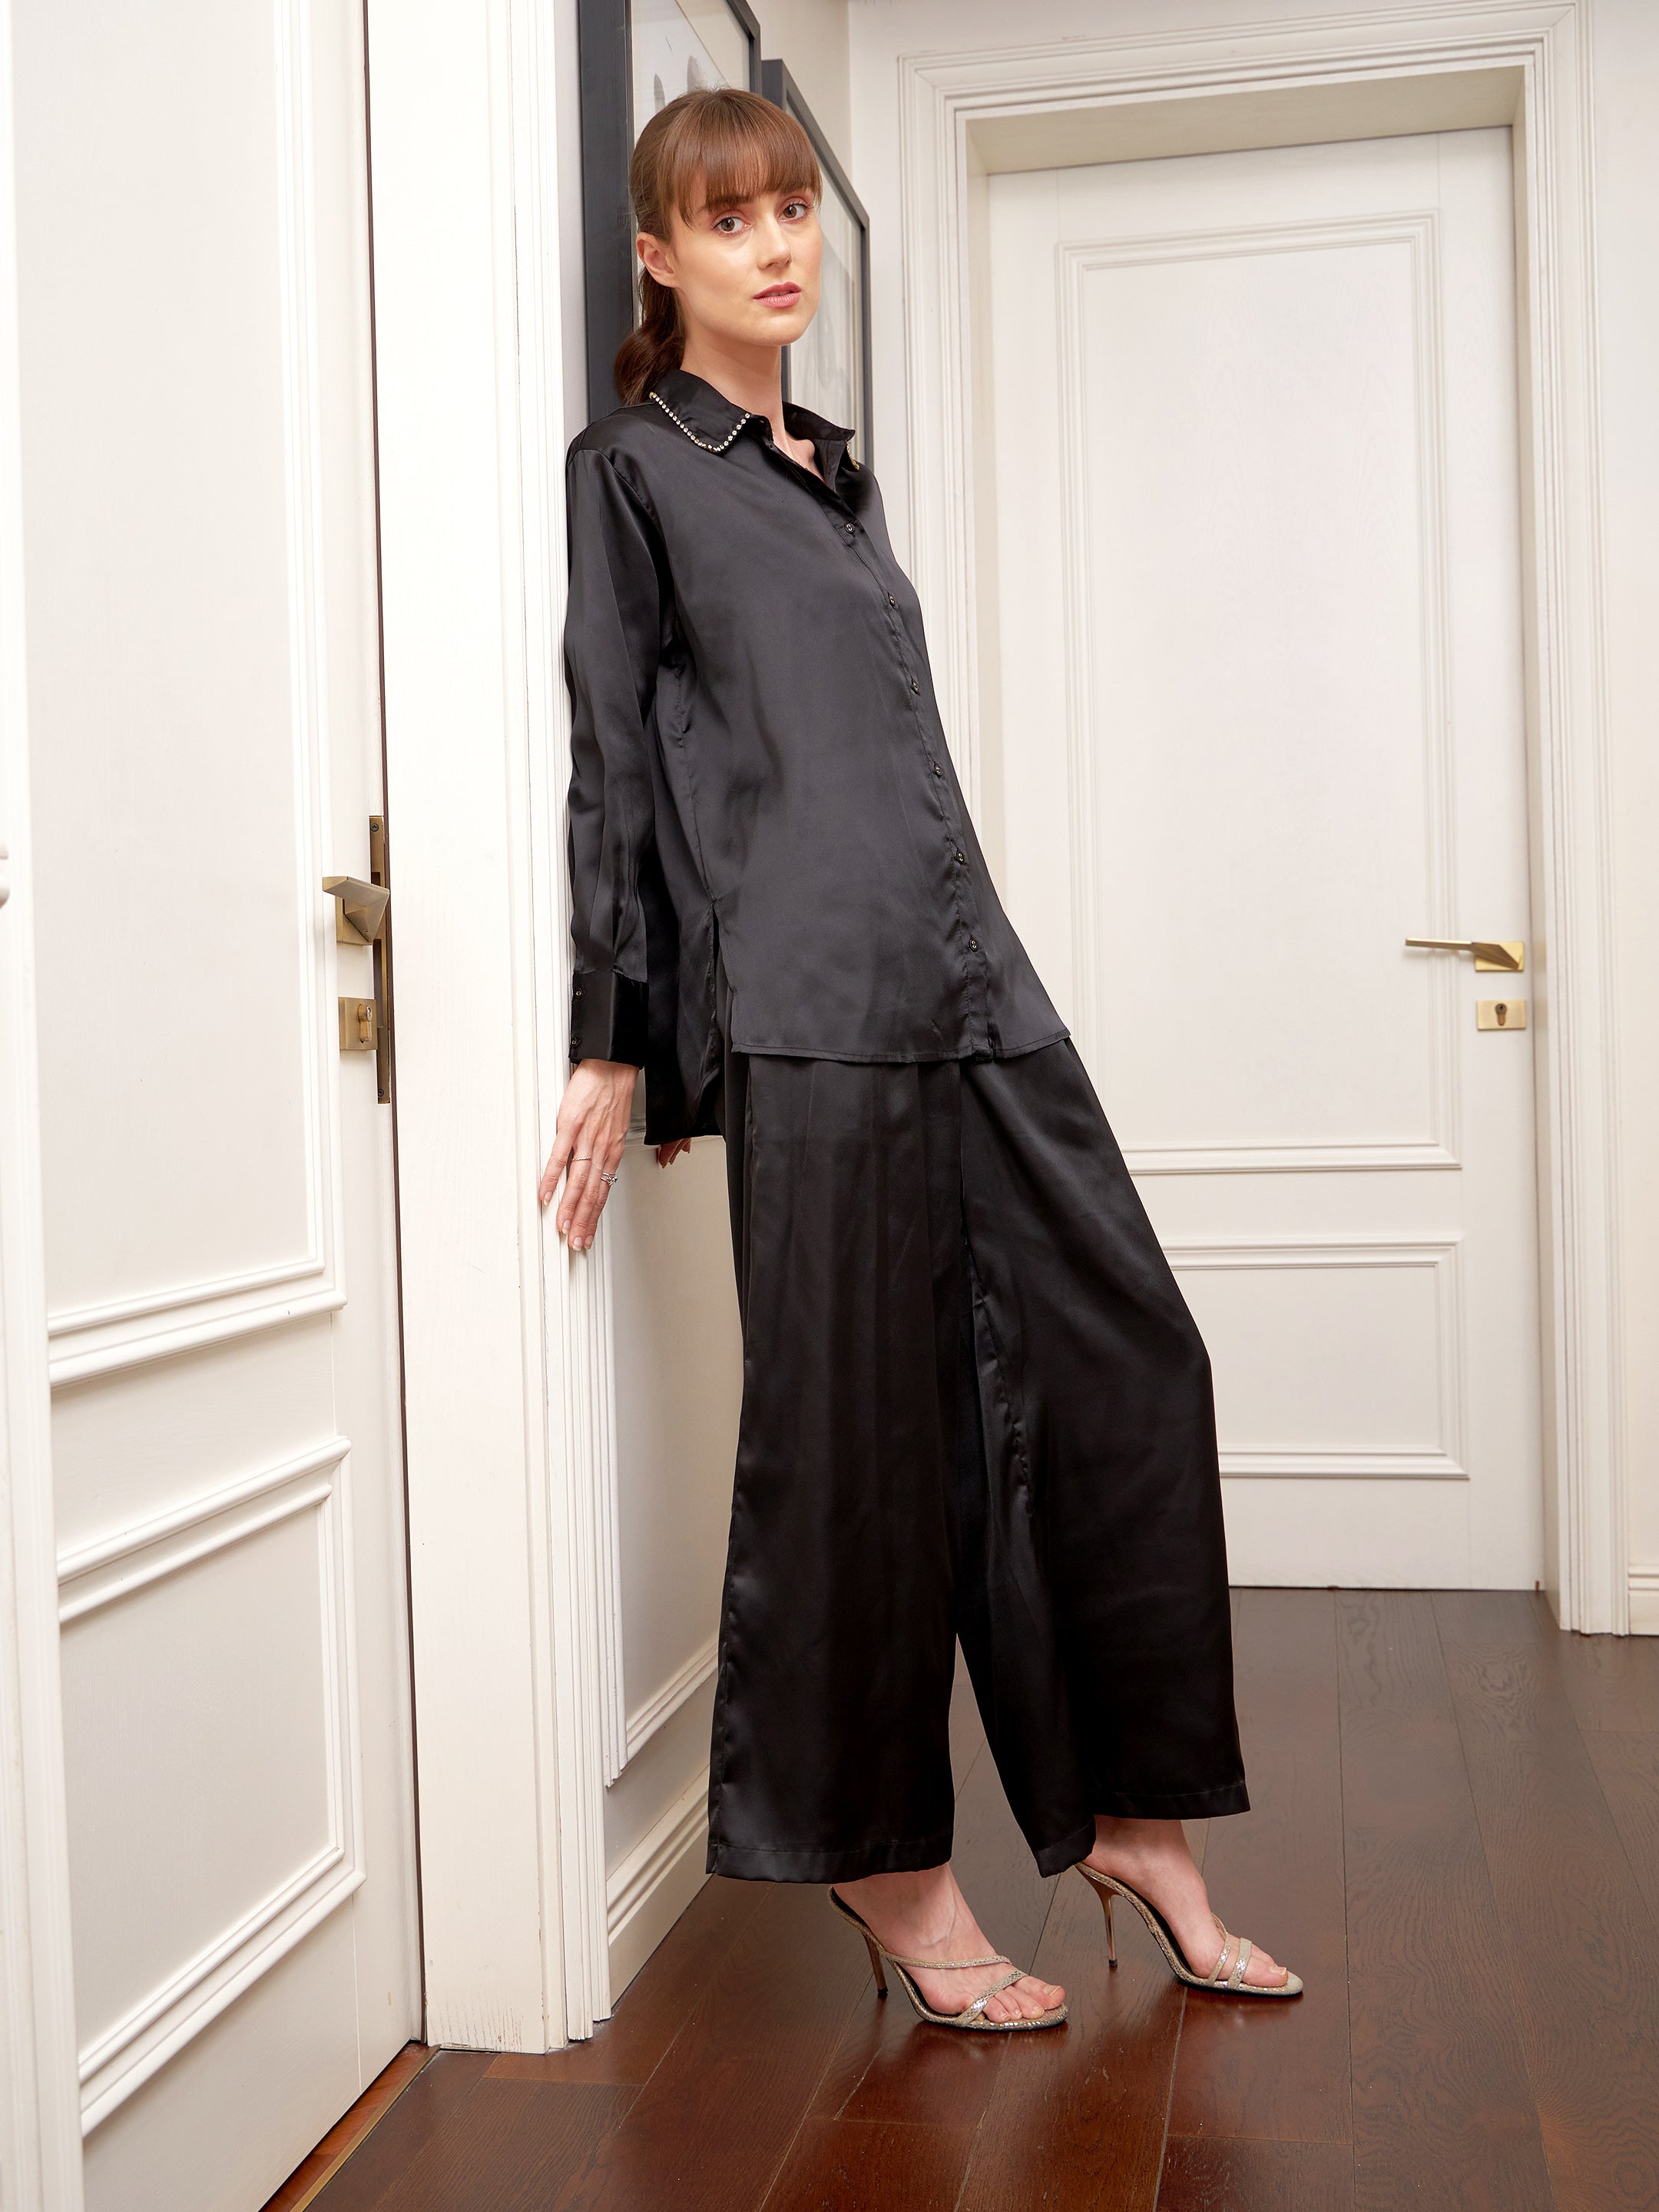 Women's Black Satin Longline Shirt With Lounge Pants - SASSAFRAS